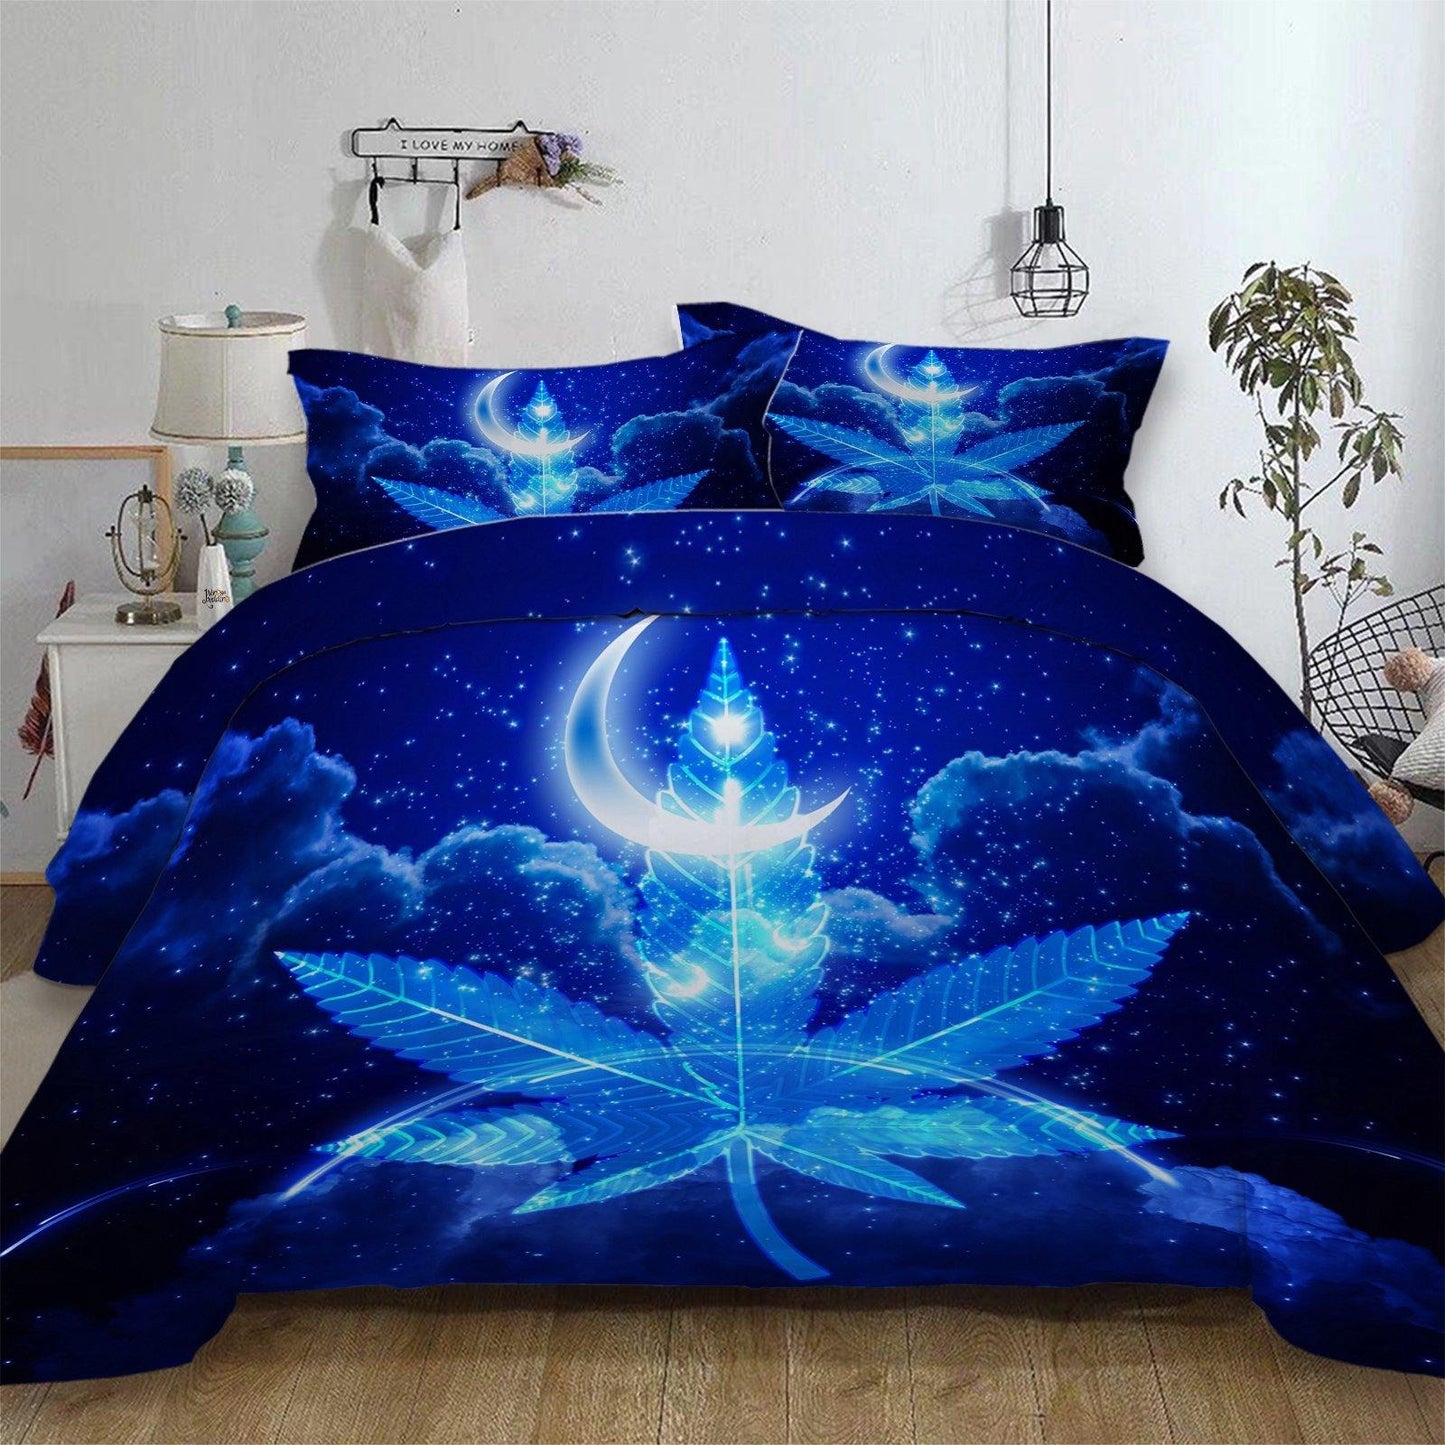 WONGS BEDDING Blue Moonlight Bedding Bedroom Home Kit - Wongs bedding